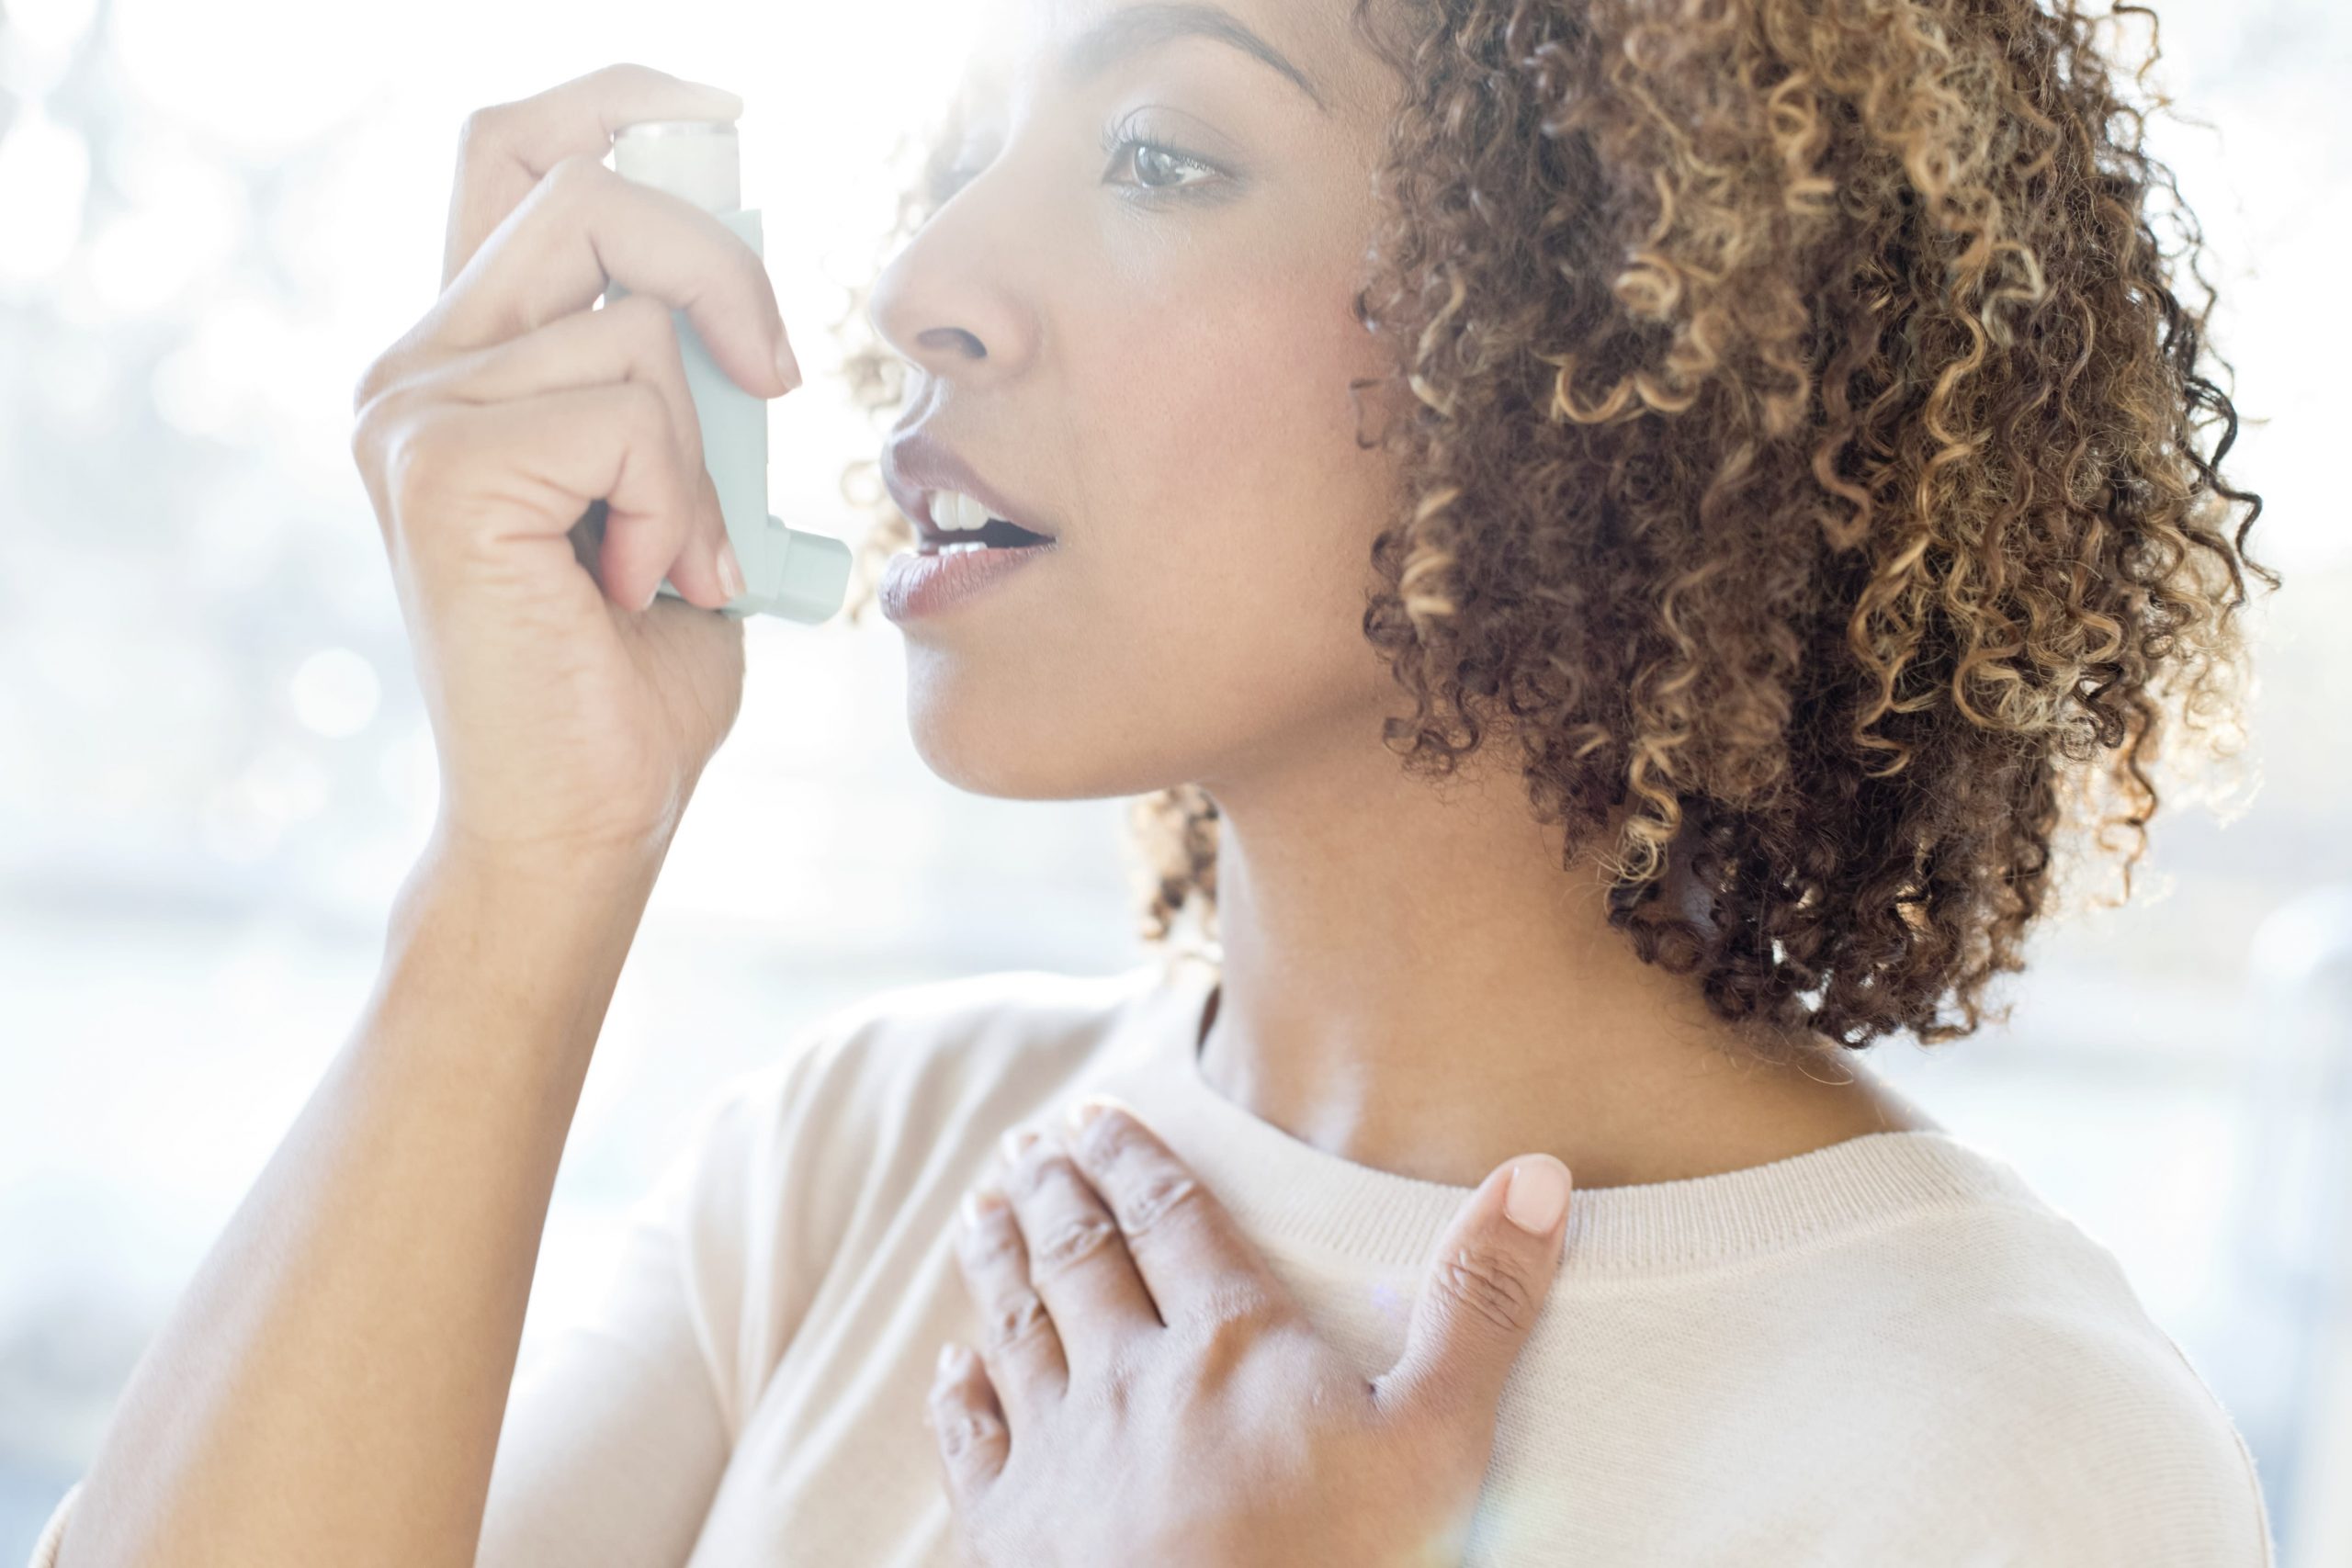 Asthma deaths: What